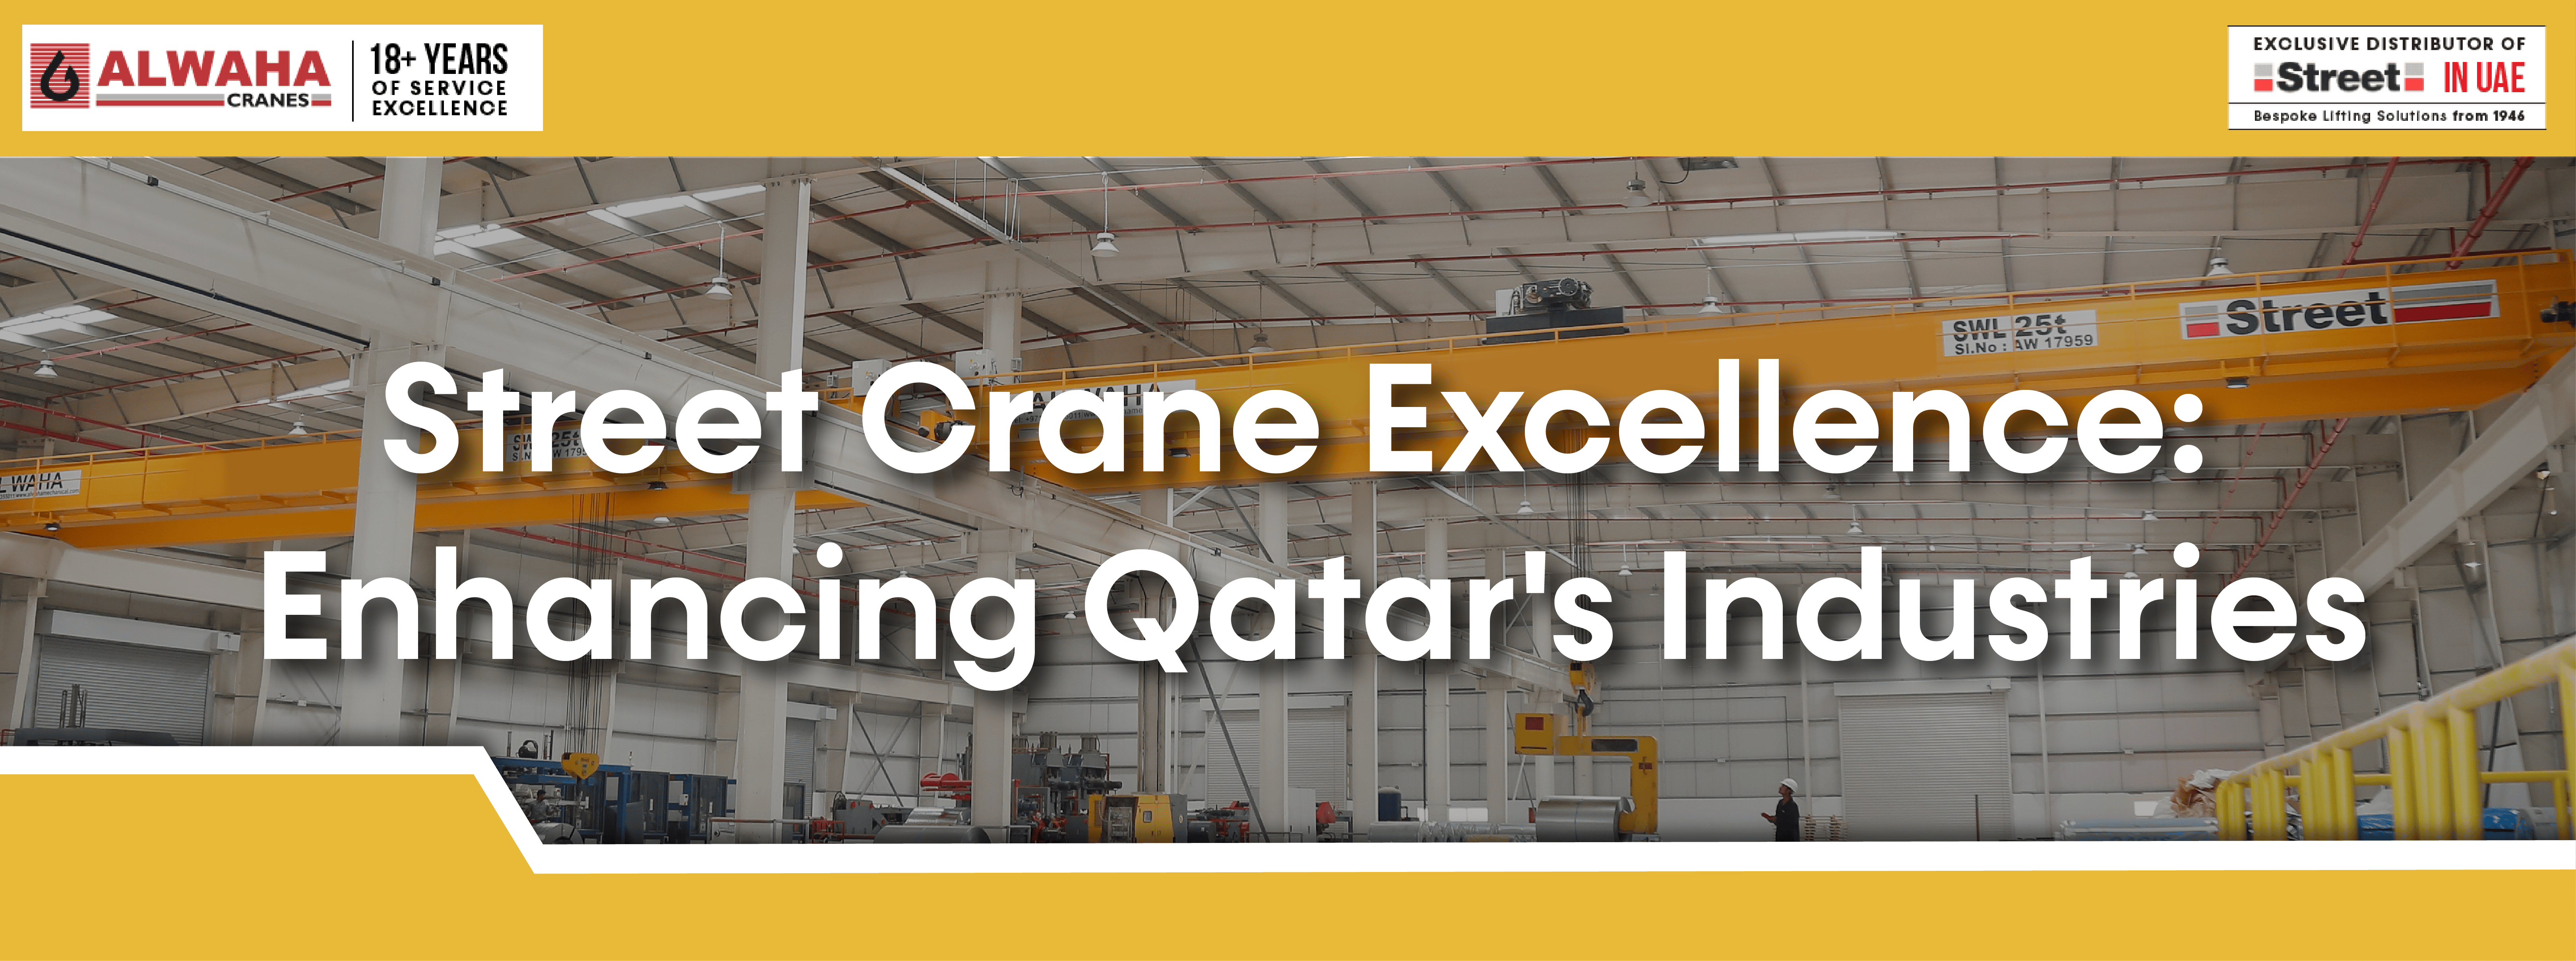 Street Crane Excellence in Qatar’s Industries